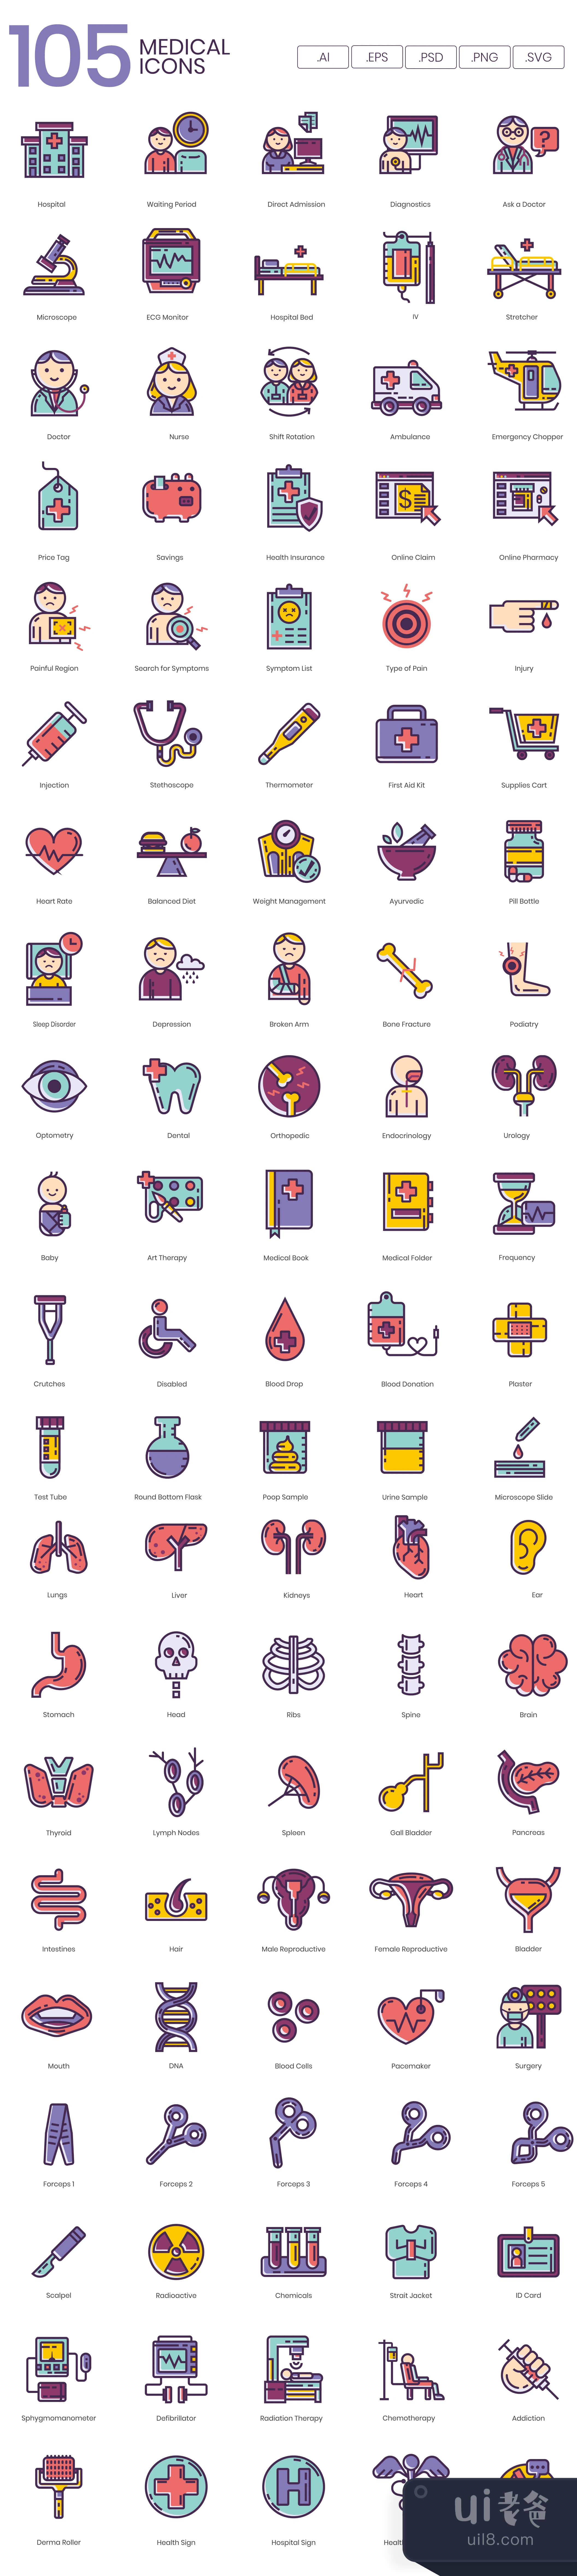 105个医疗图标 (105 Medical Icons)插图1